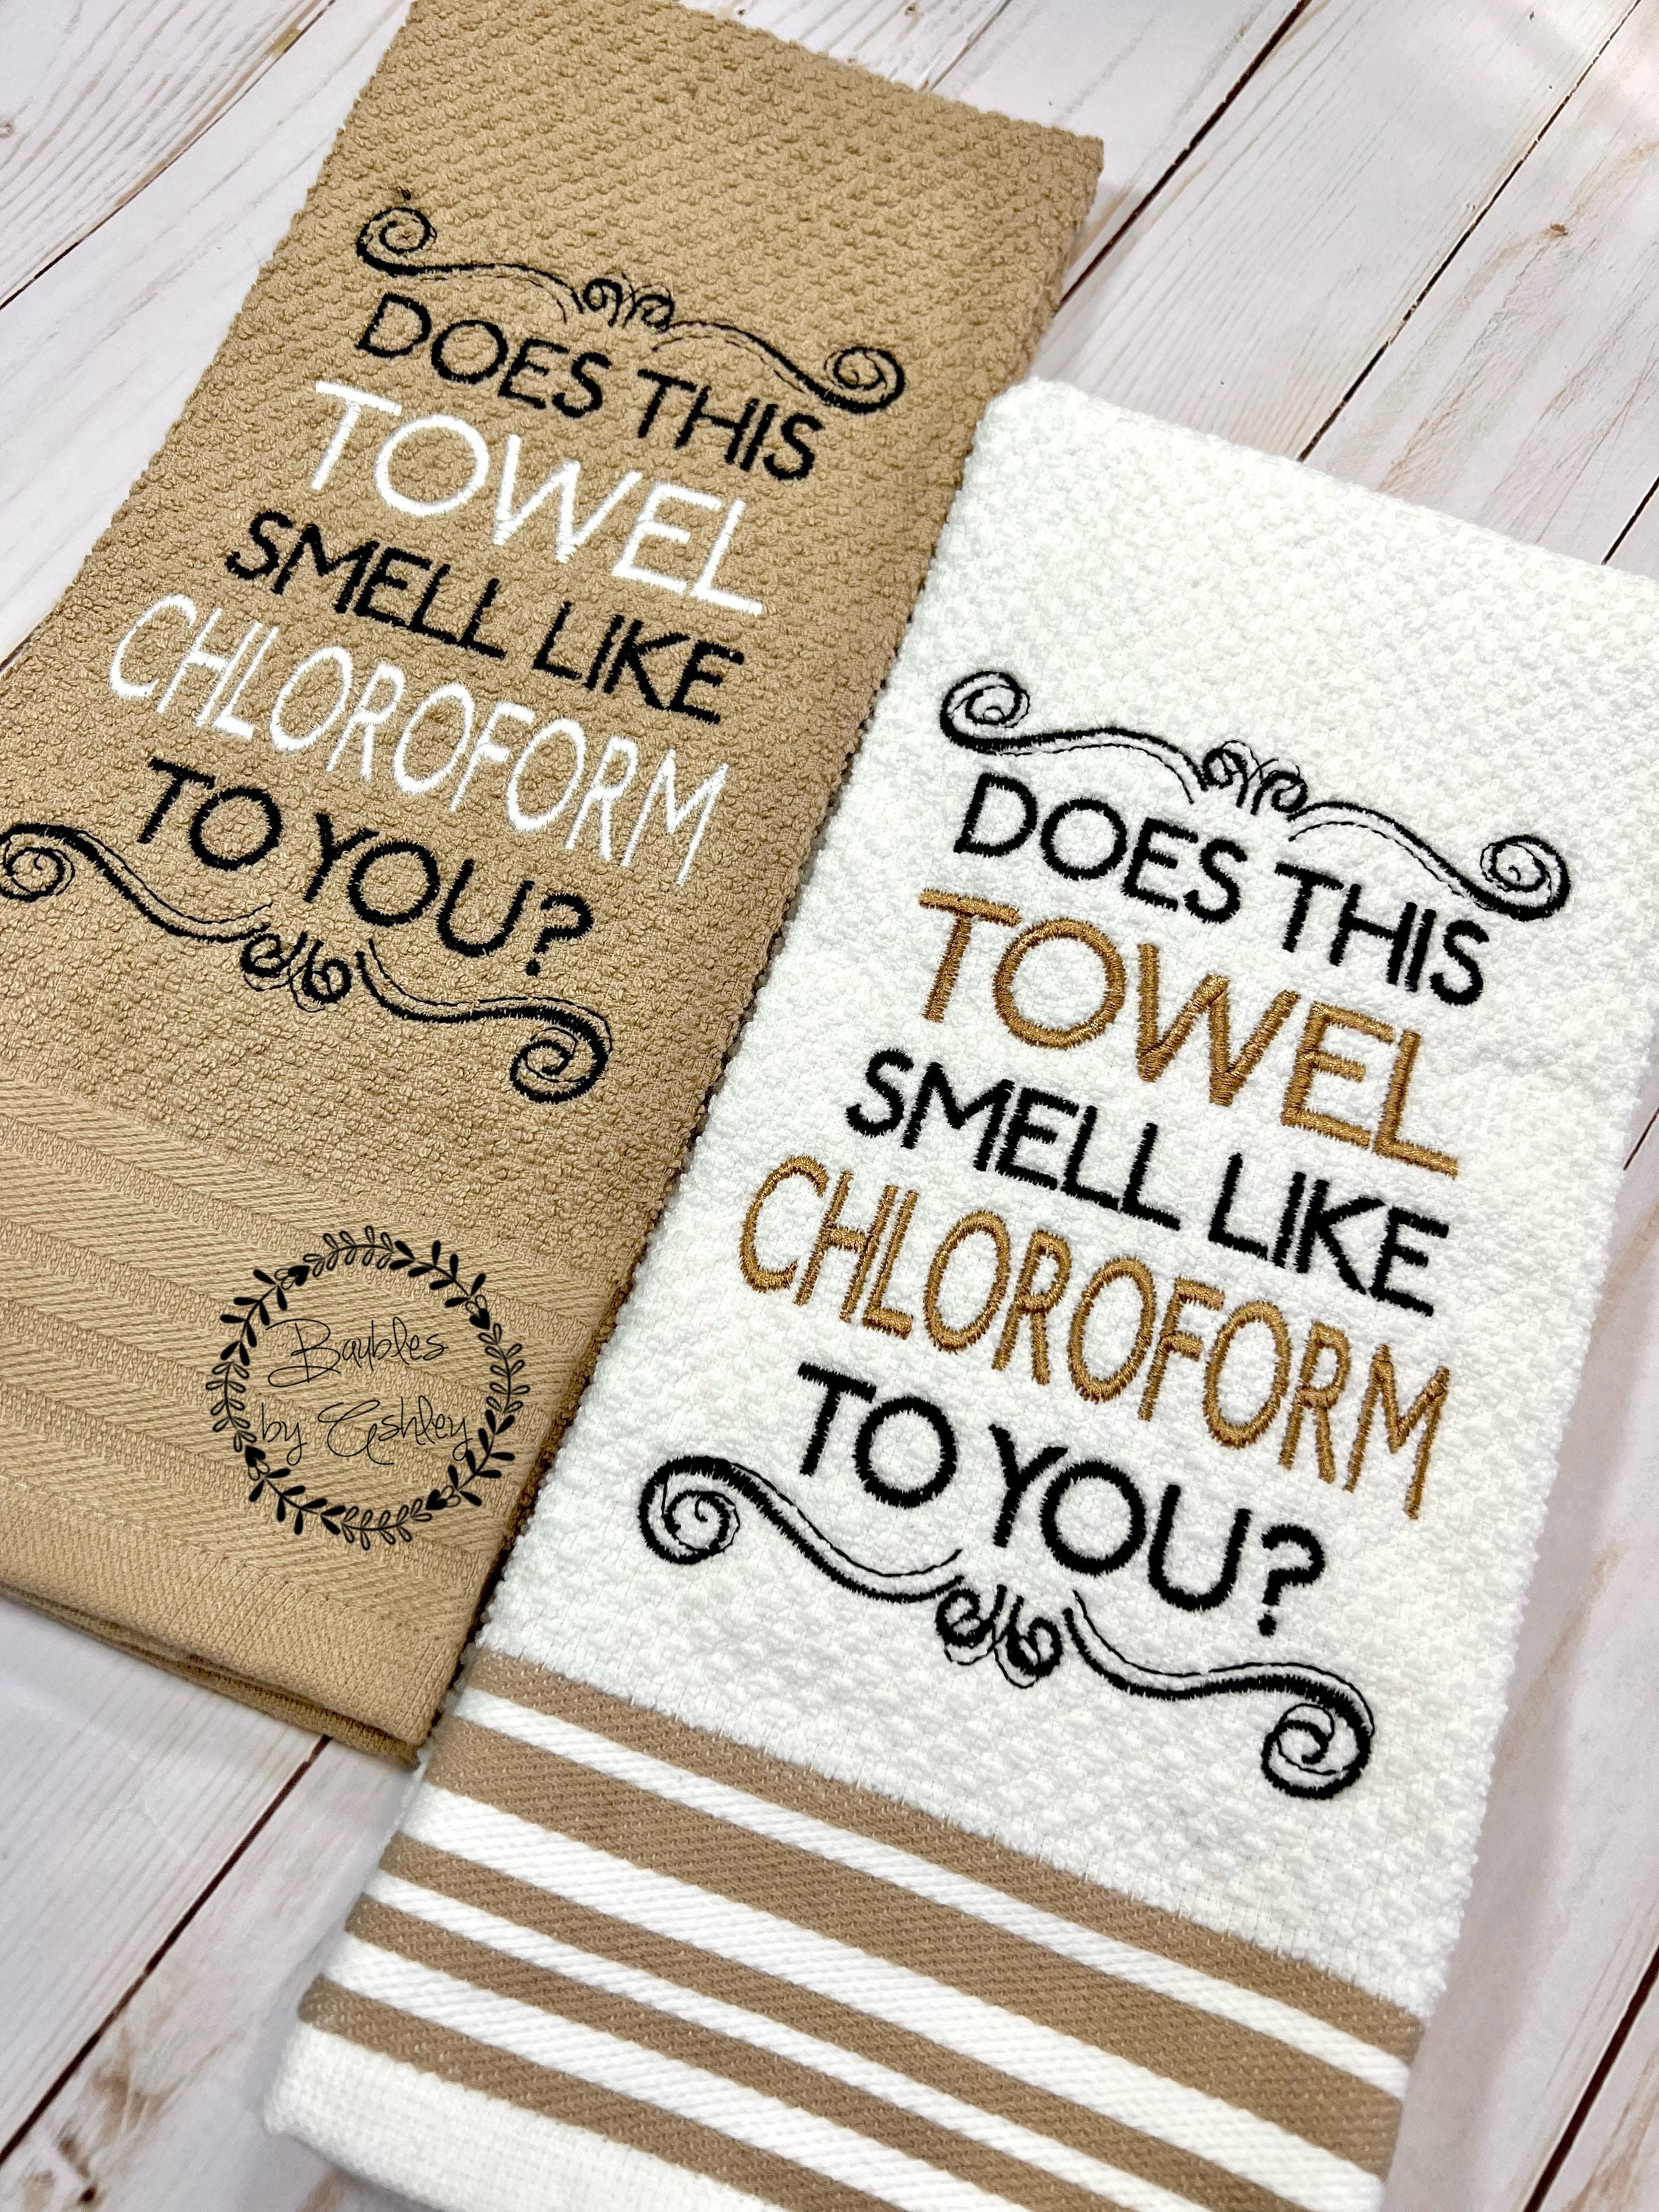 Towel Smell Like Chloroform, Halloween Decorations Home